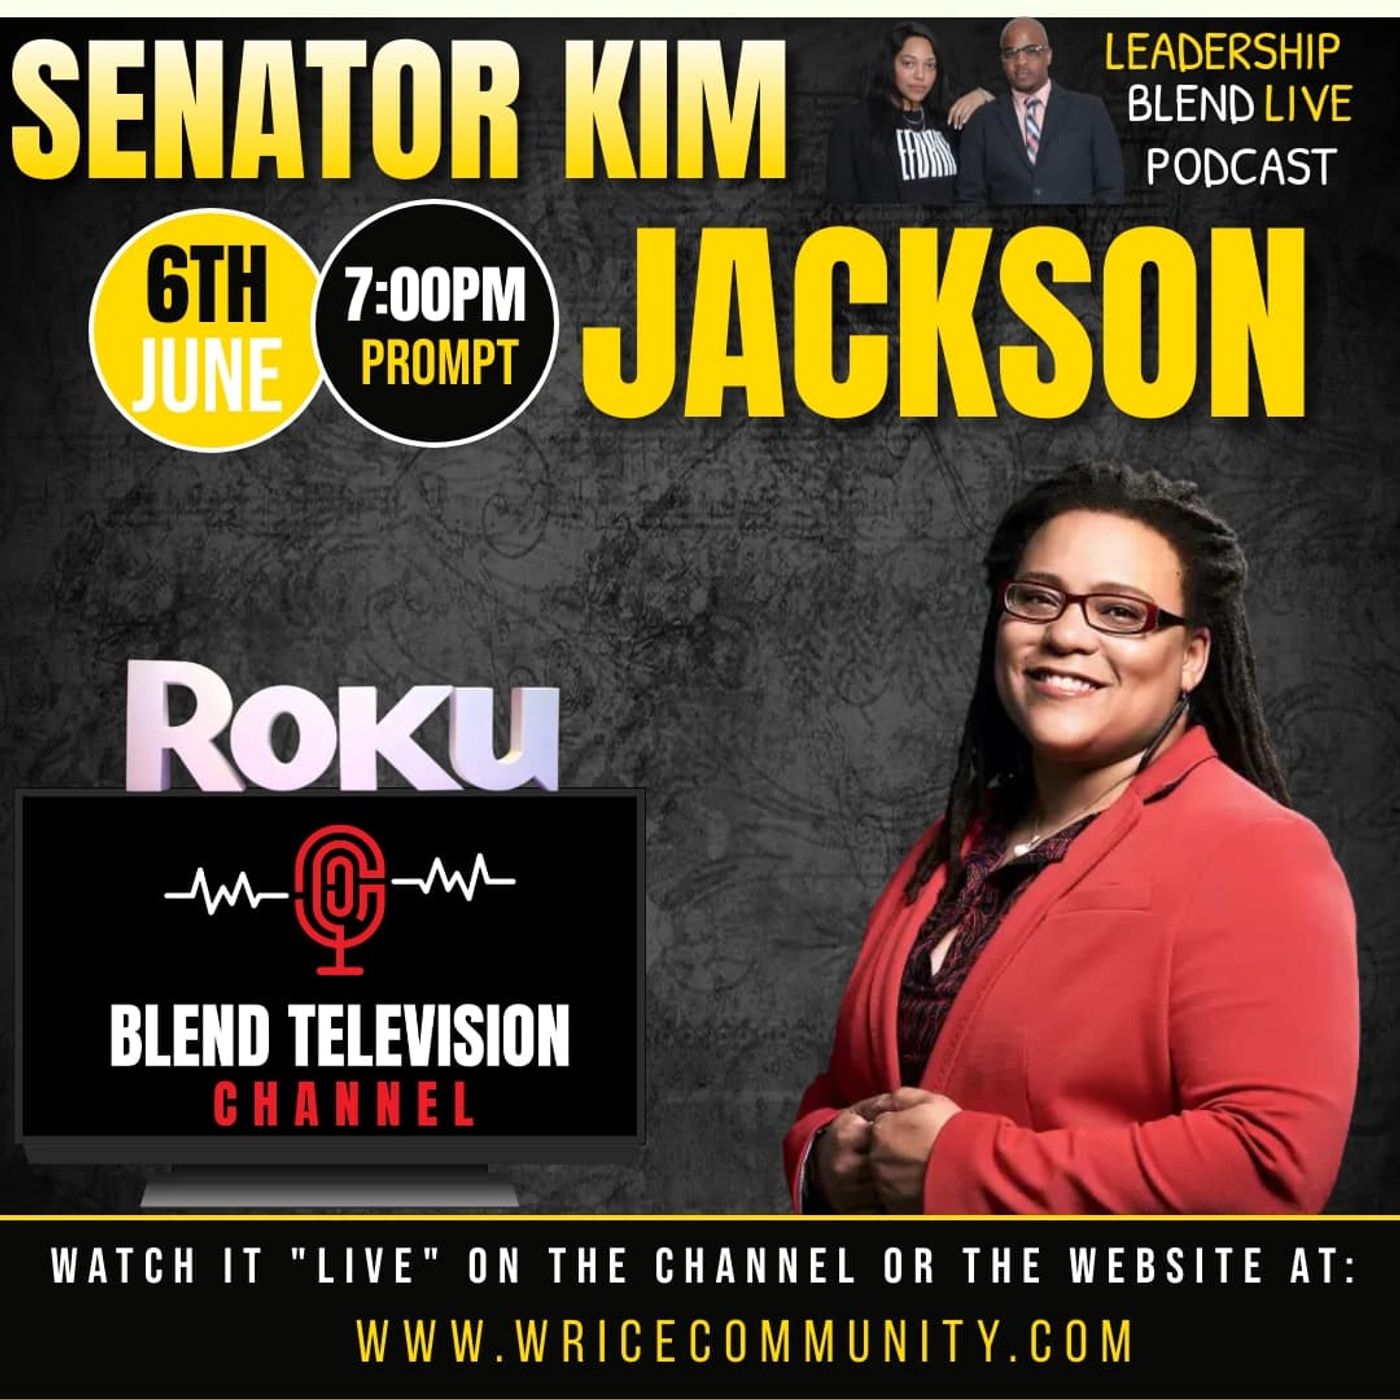 The life of a Senator with Senator Kim Jackson